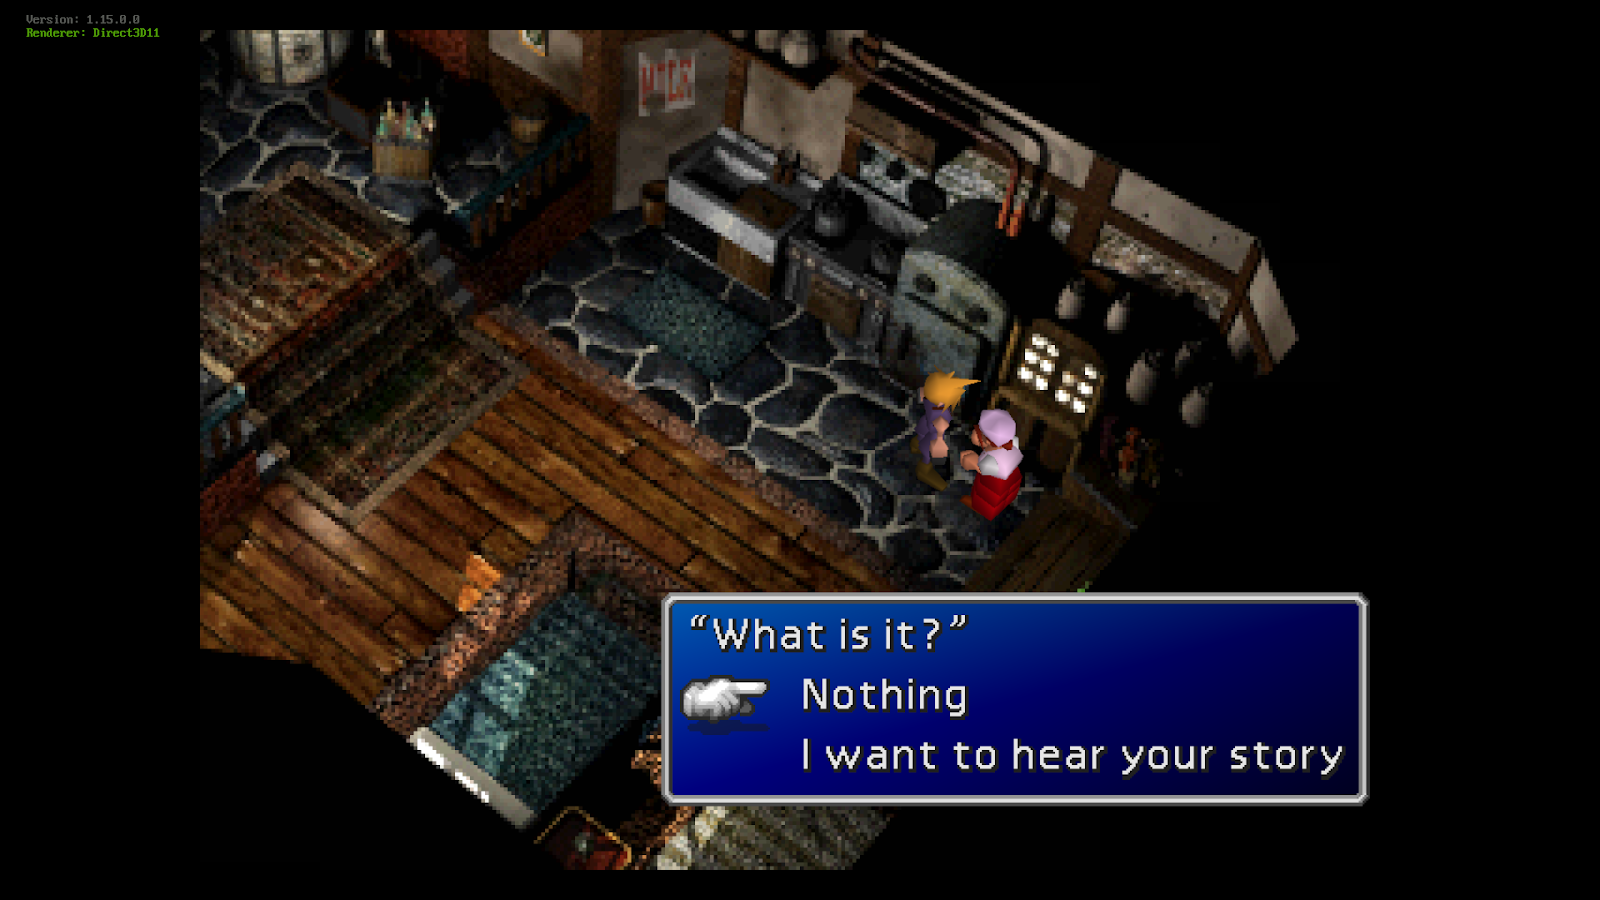 Final Fantasy VII Remake' Mod Makes Your NPCs Less Veiny